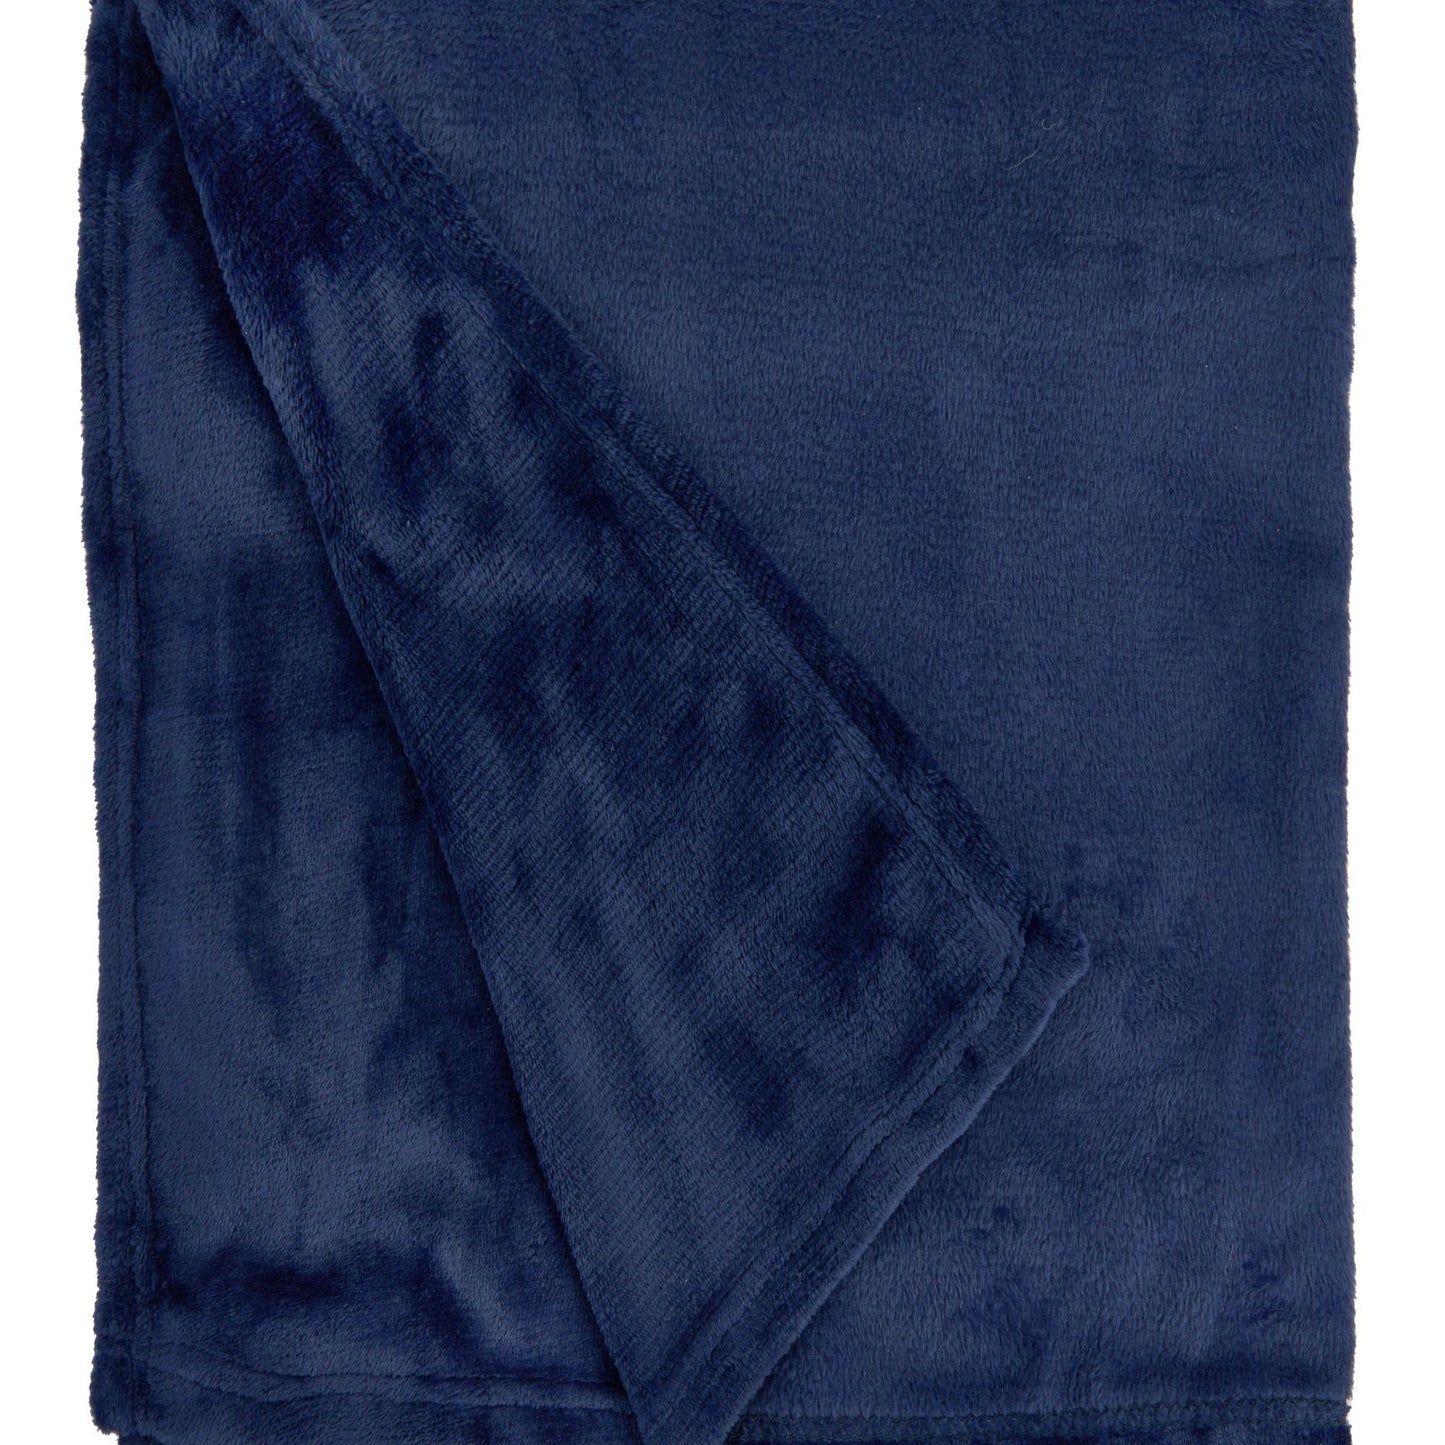 Navy Blue Snug Flannel Fleece Super Soft Throw